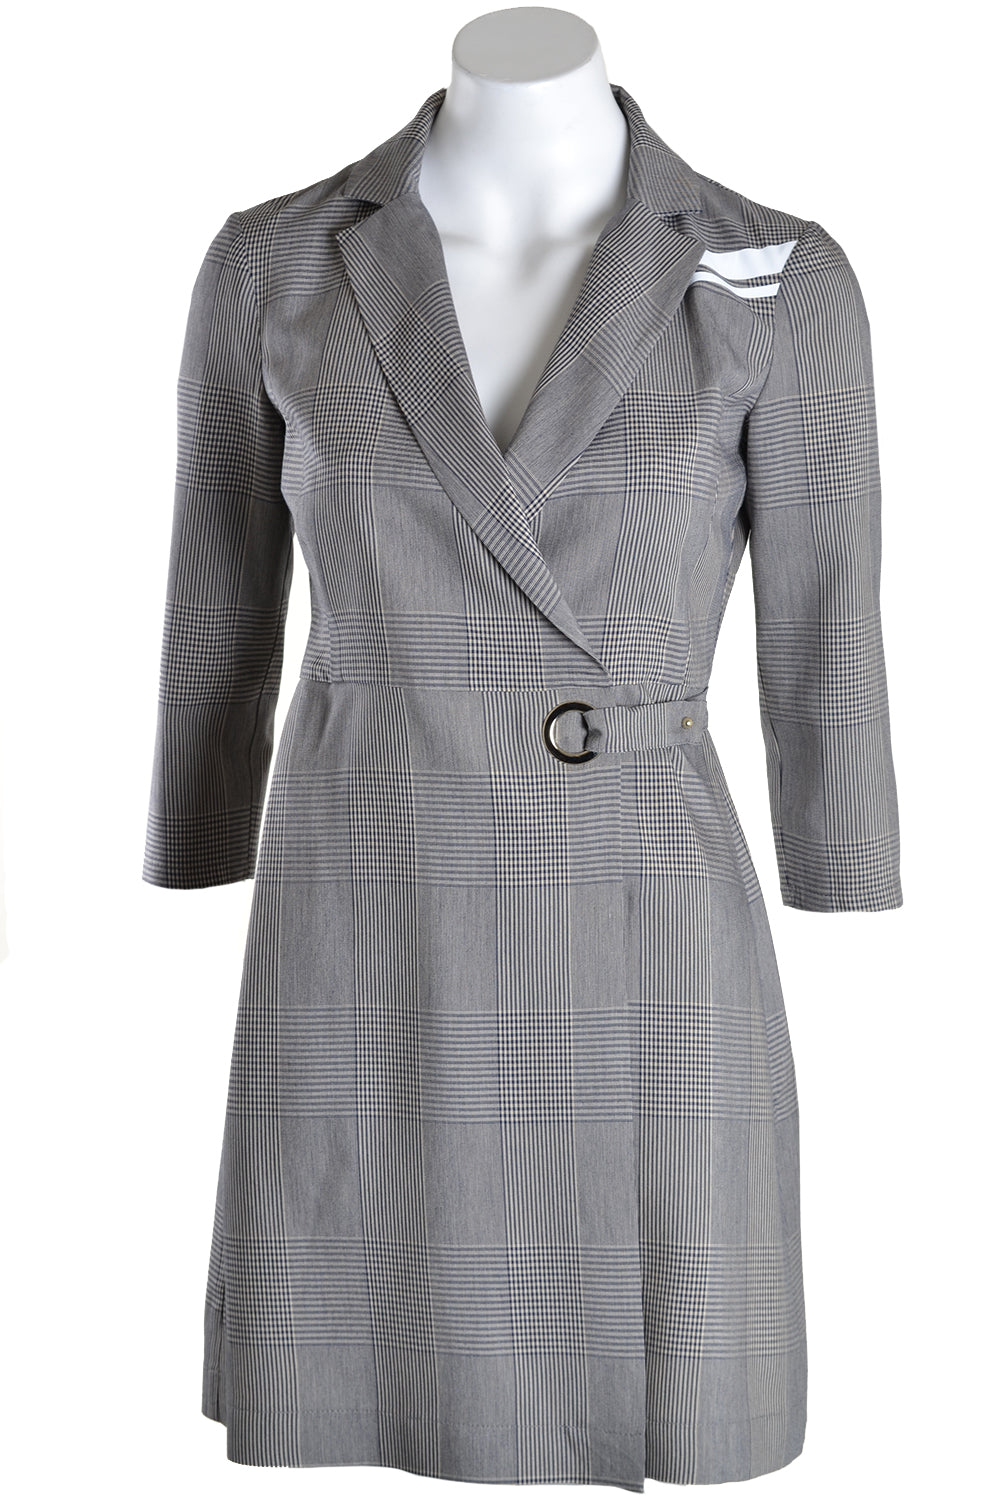 Patrizia Pepe Dress Check Asymmetric Moon Check Grey - Sub Couture